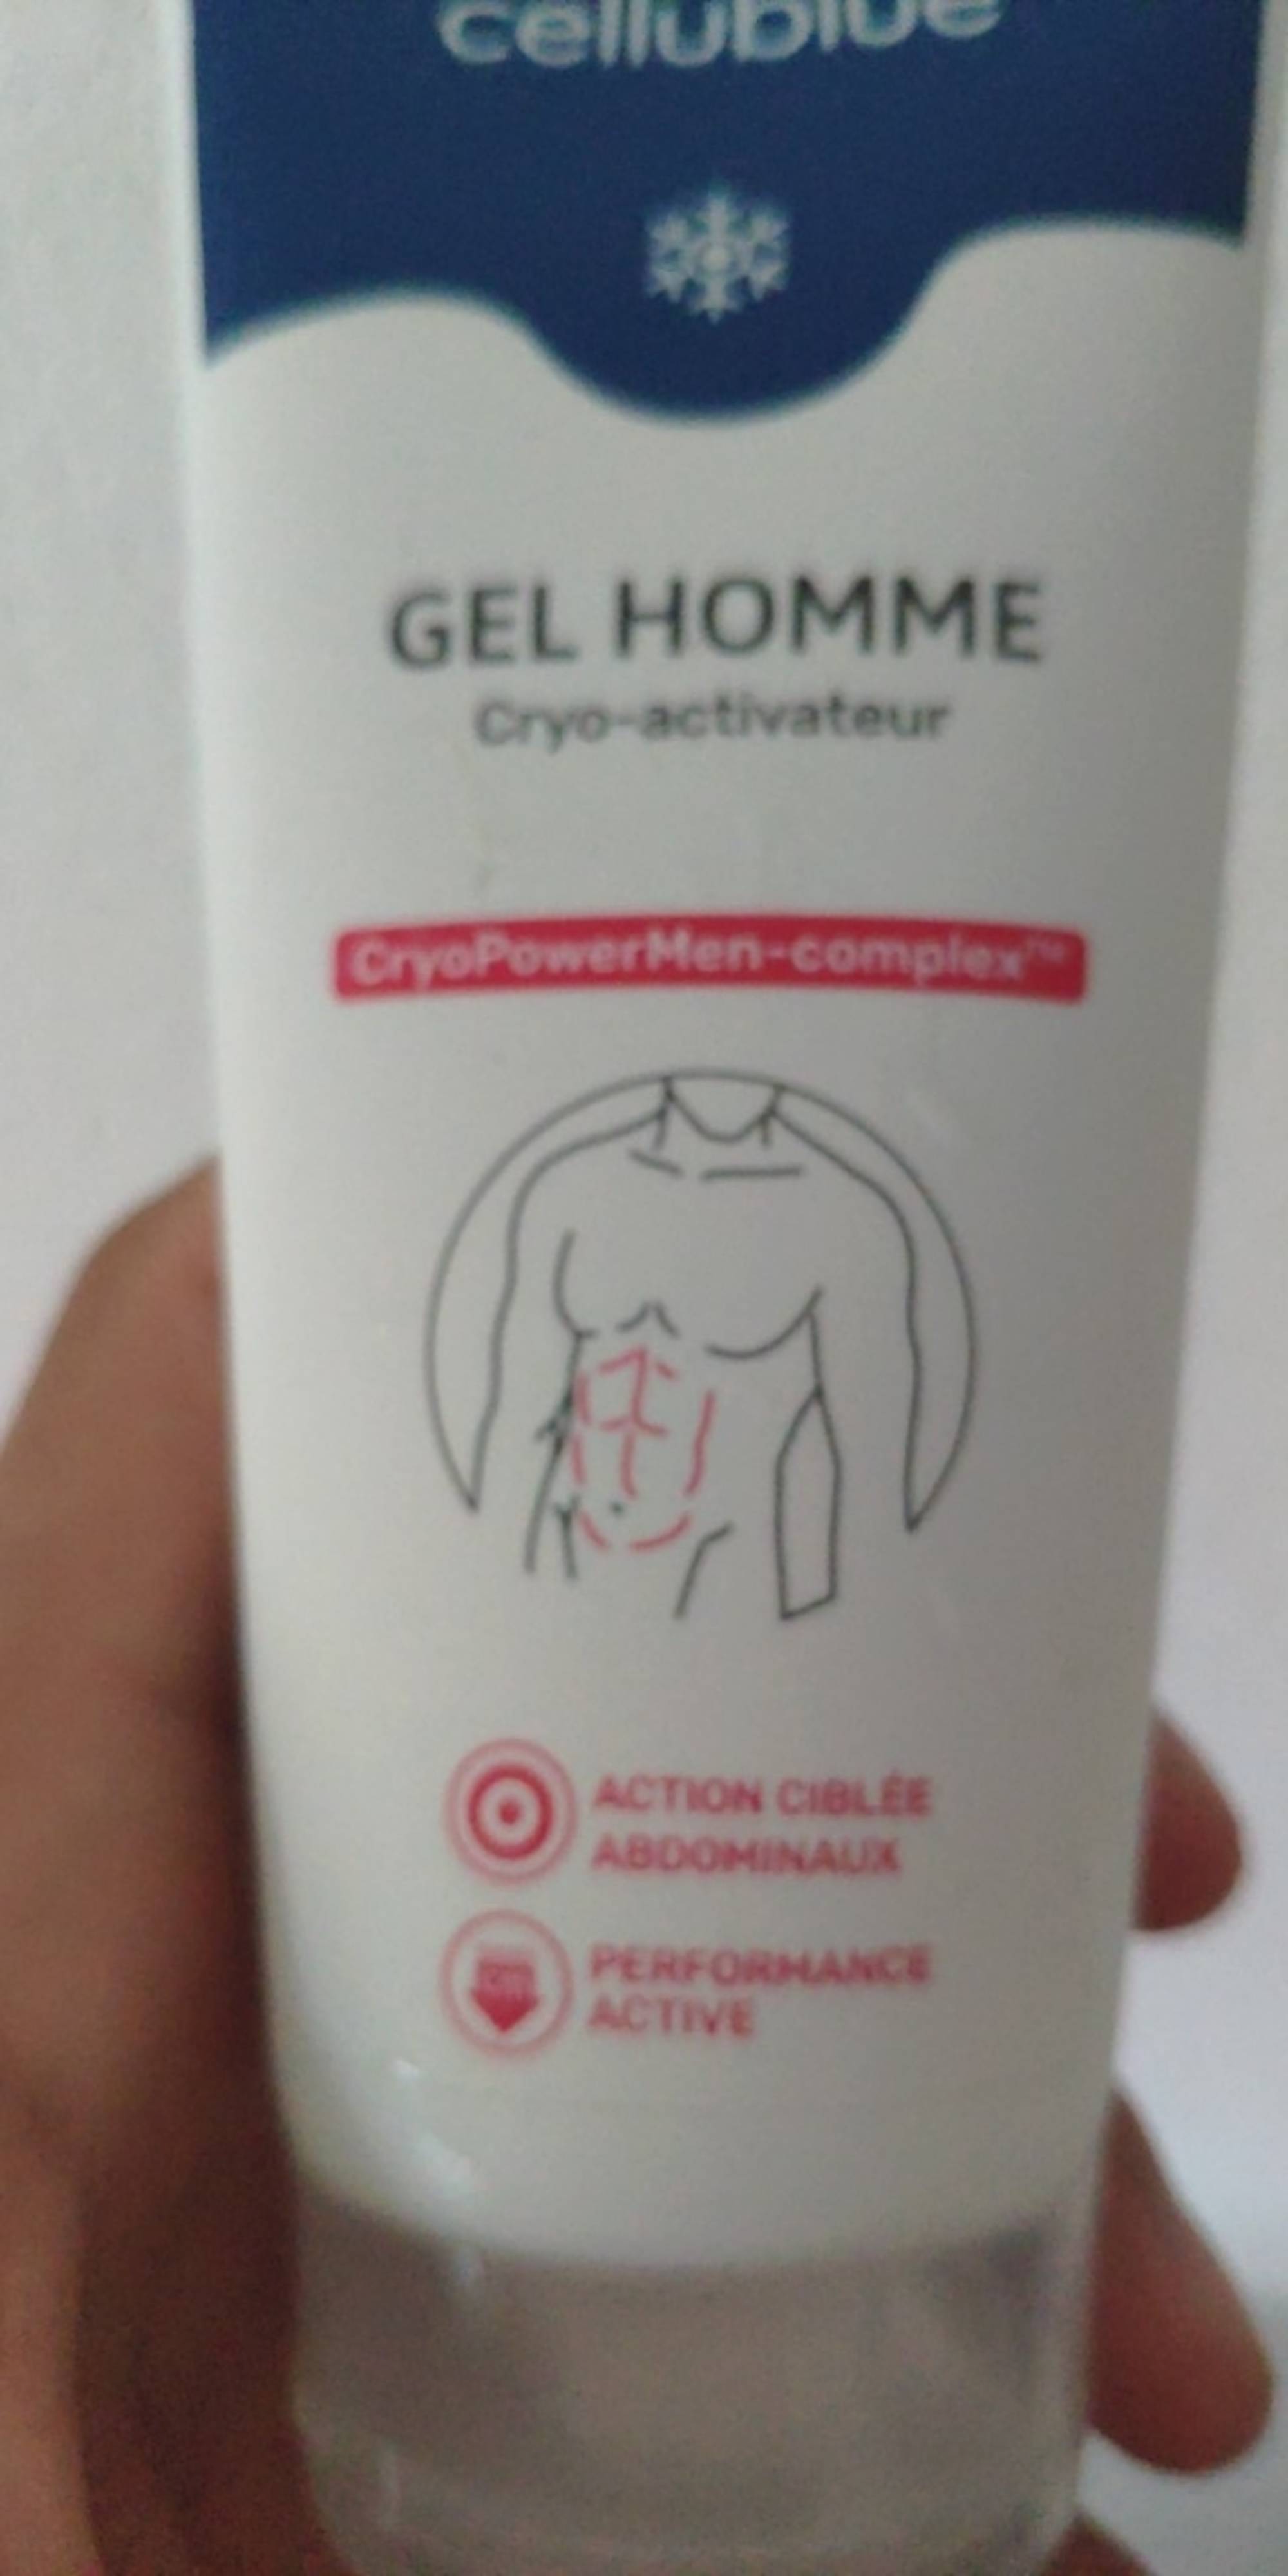 CELLUBLUE - Cryo-activateur - Gel homme 